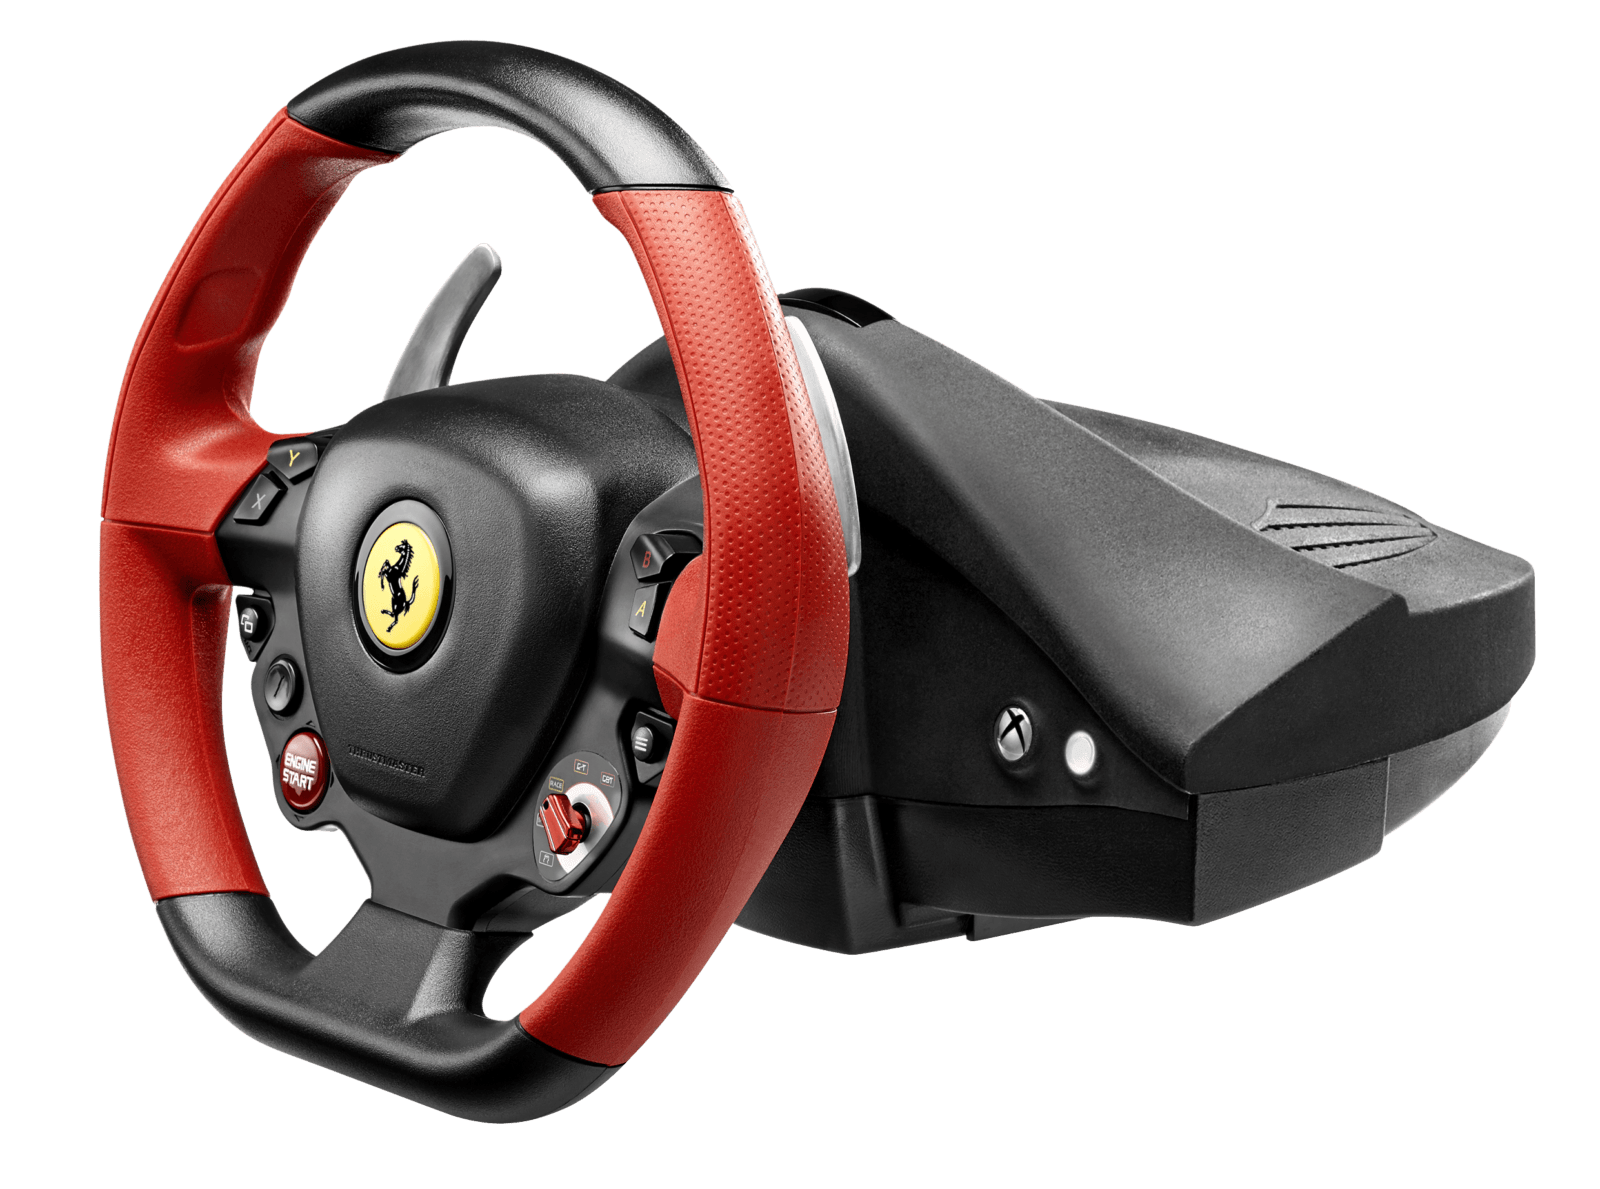 Thrustmaster Ferrari 458 Spider Racing Wheel Xb1